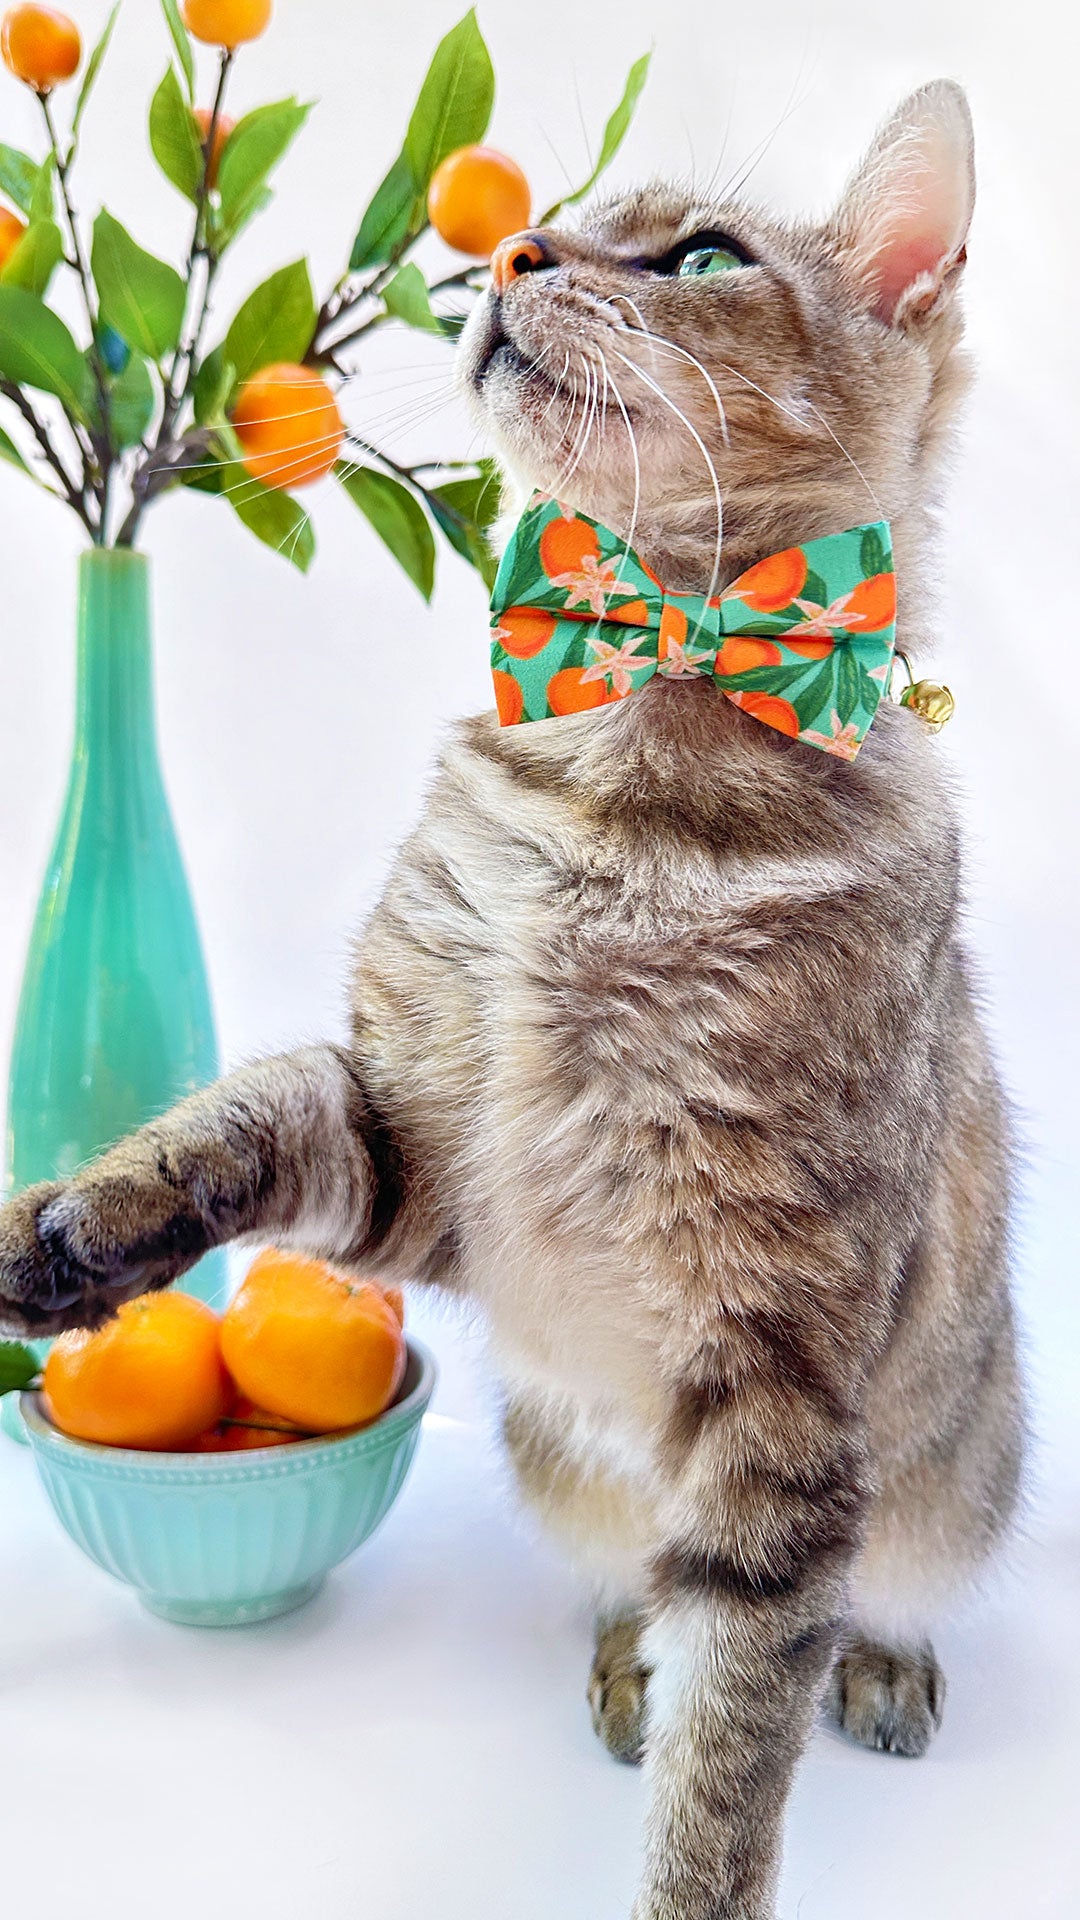 Food, Fun & Novelty Cat Collars & Accessories